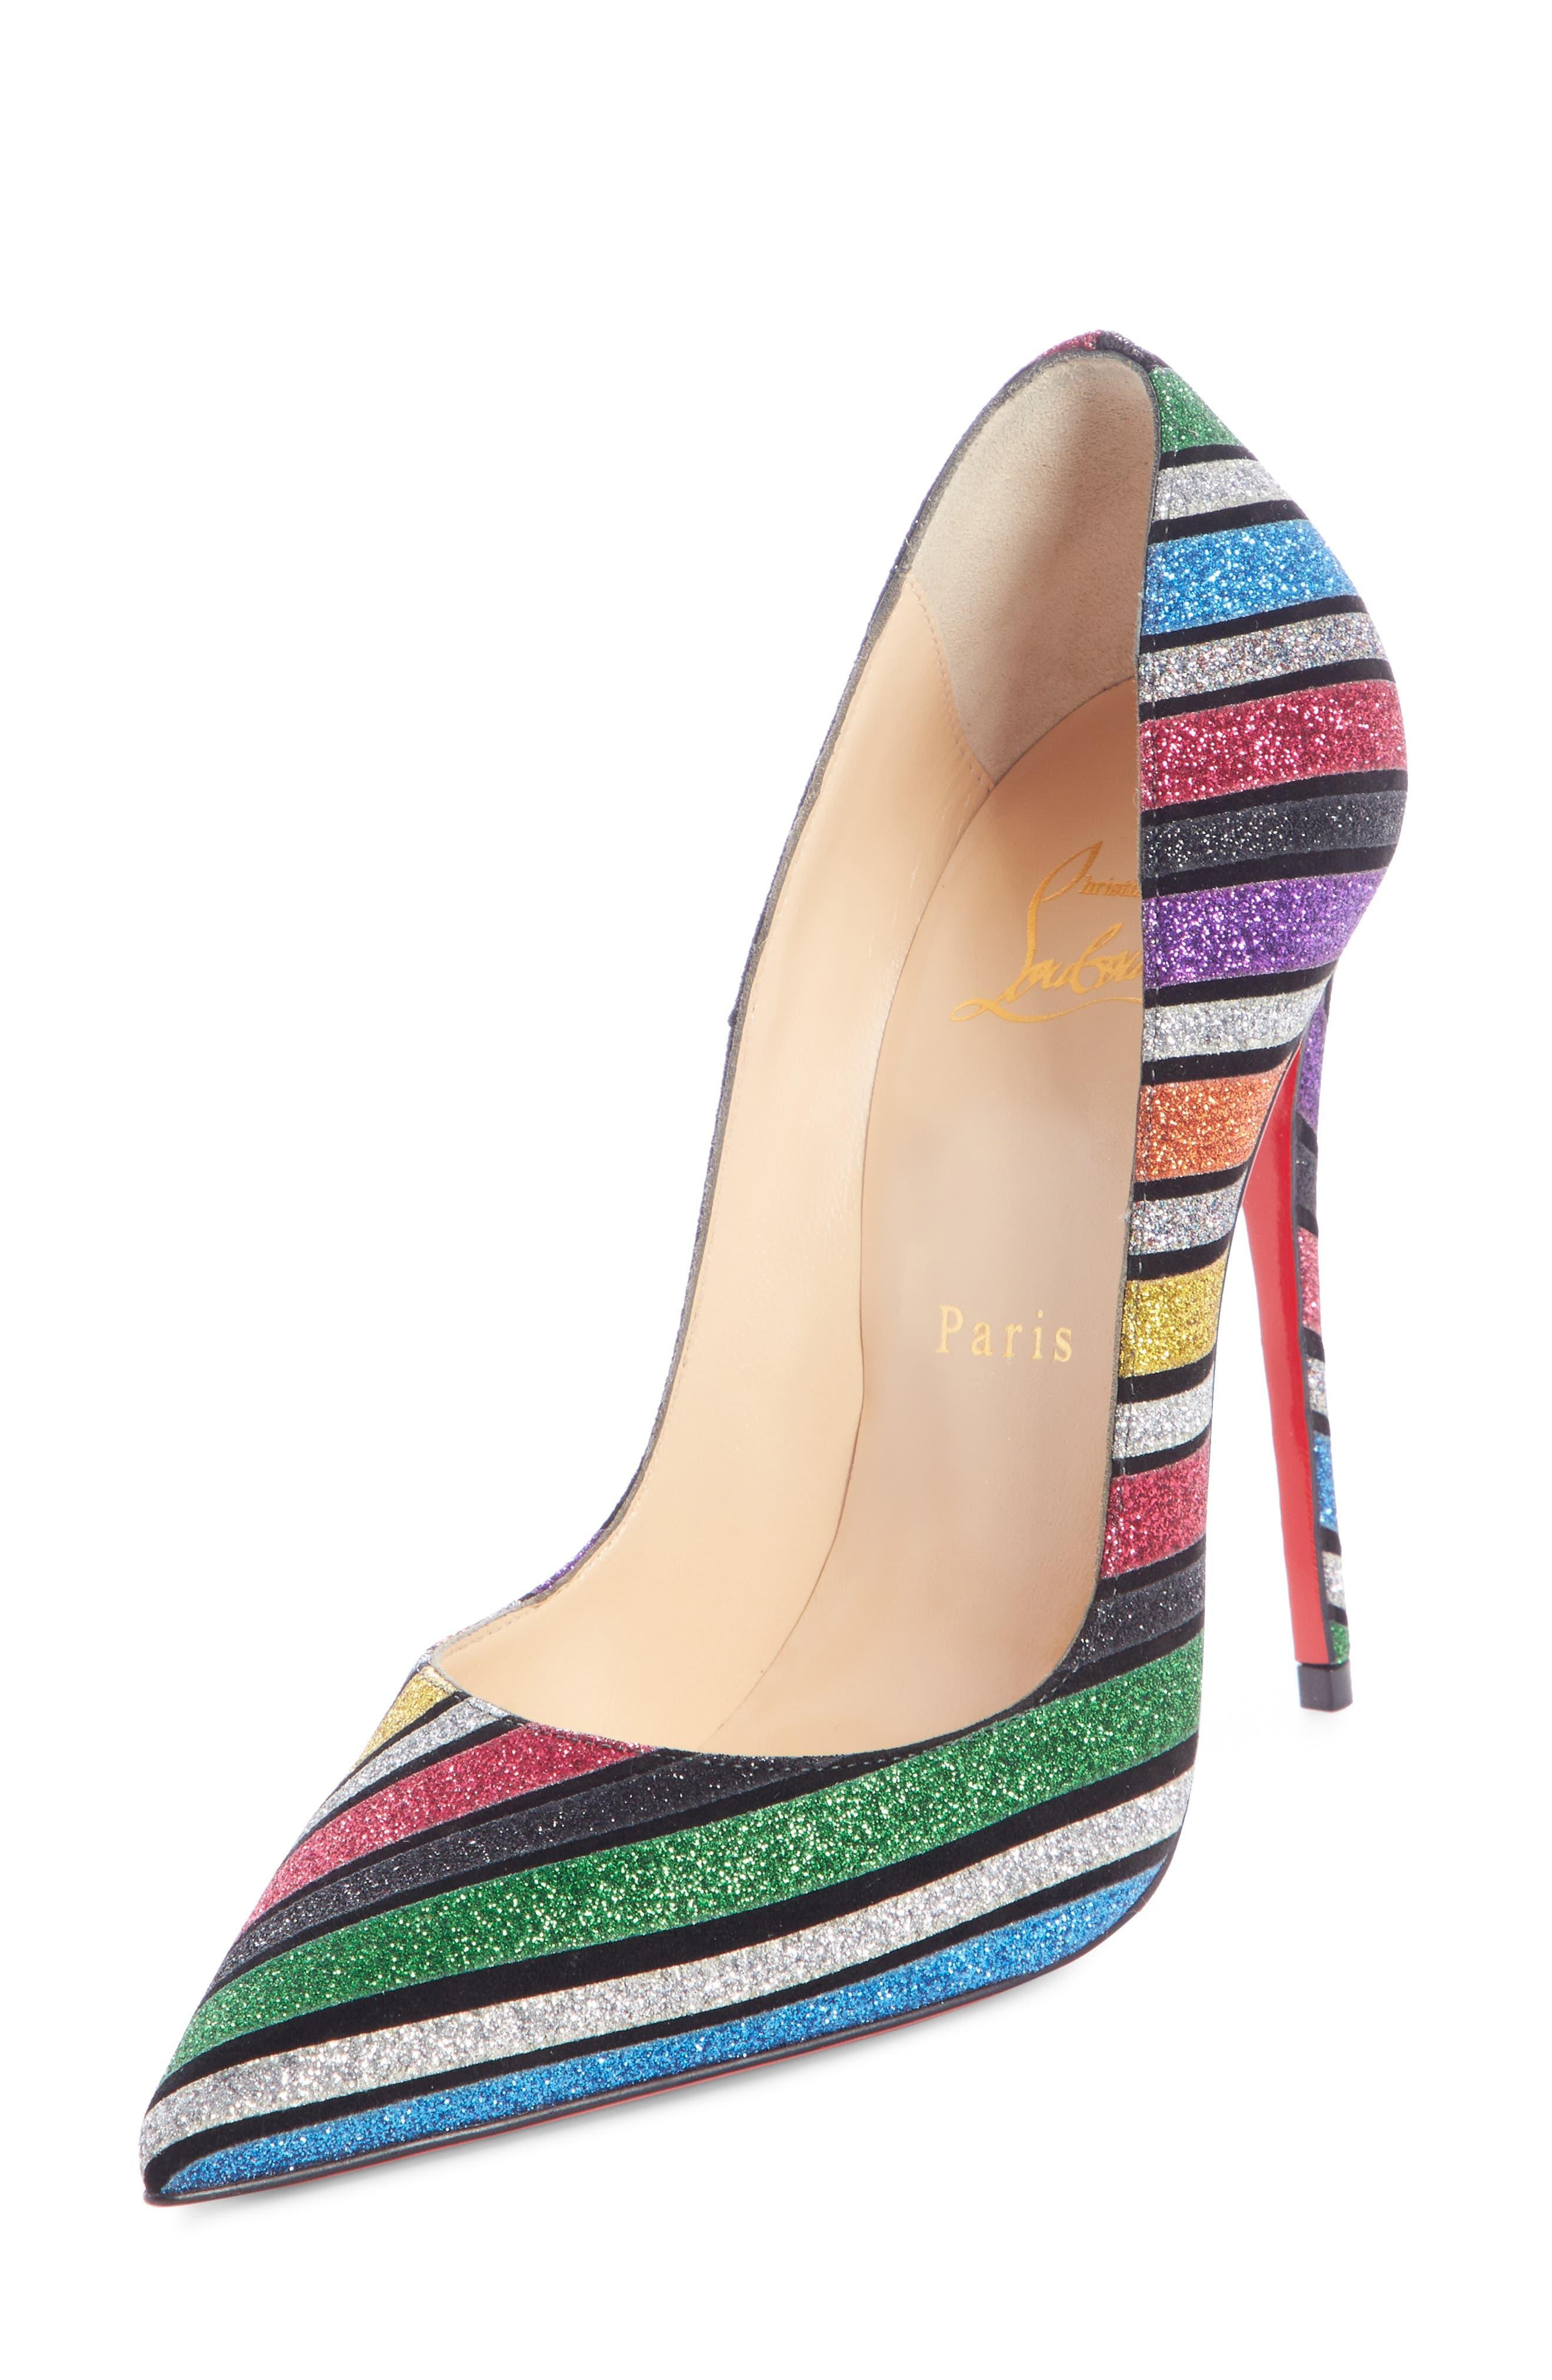 louboutin heels rainbow